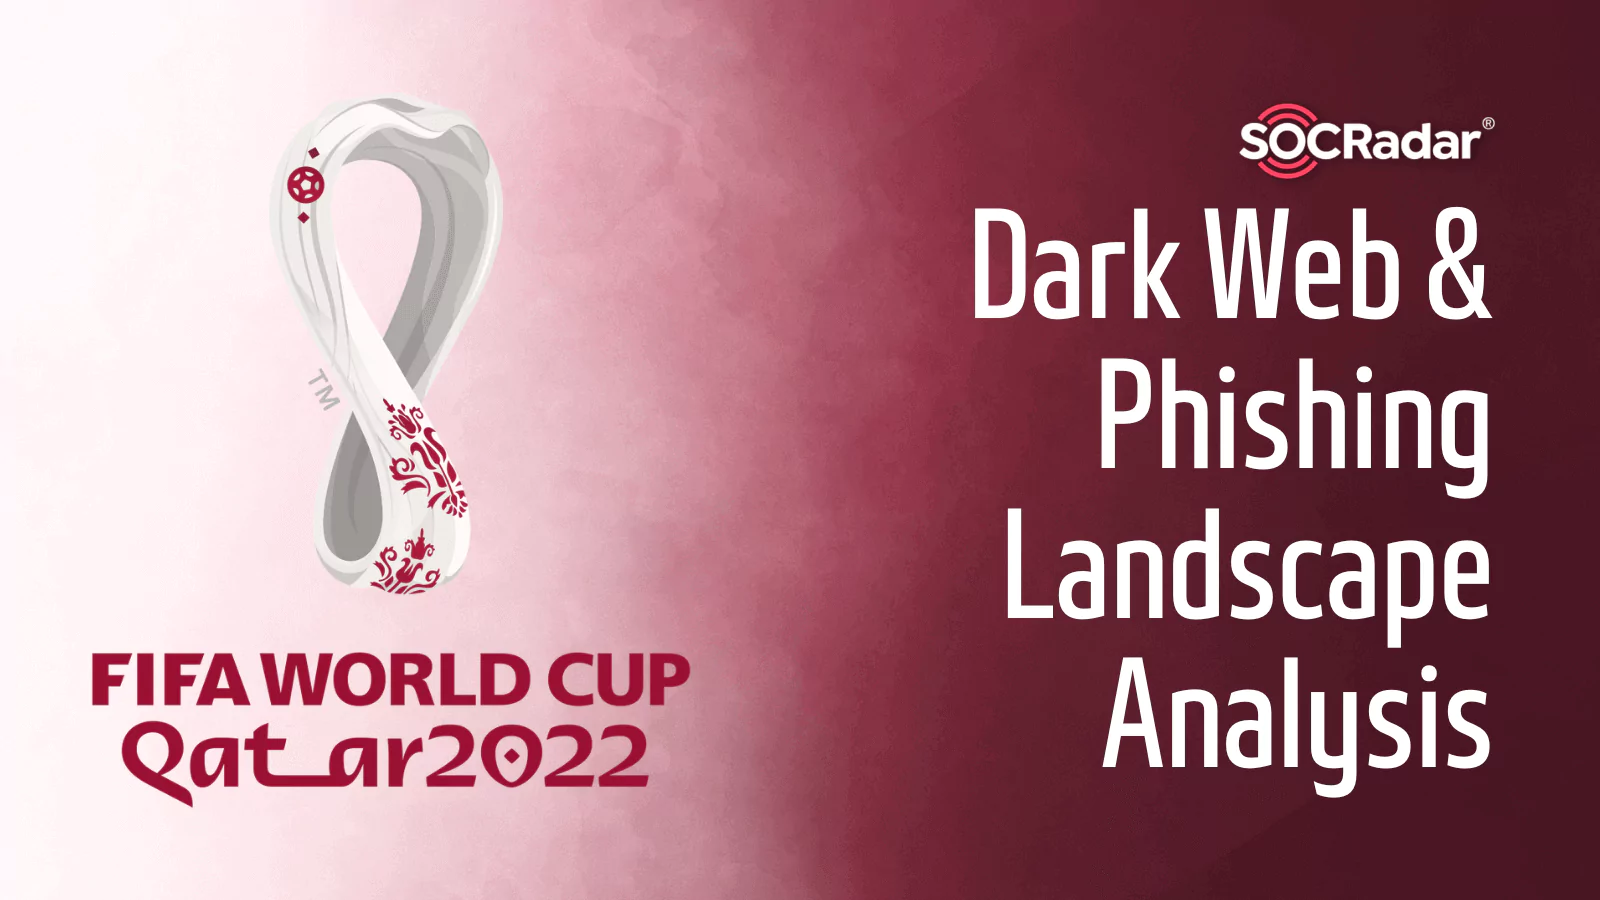 SOCRadar® Cyber Intelligence Inc. | FIFA World Cup 2022 Qatar: Dark Web & Phishing Landscape Analysis